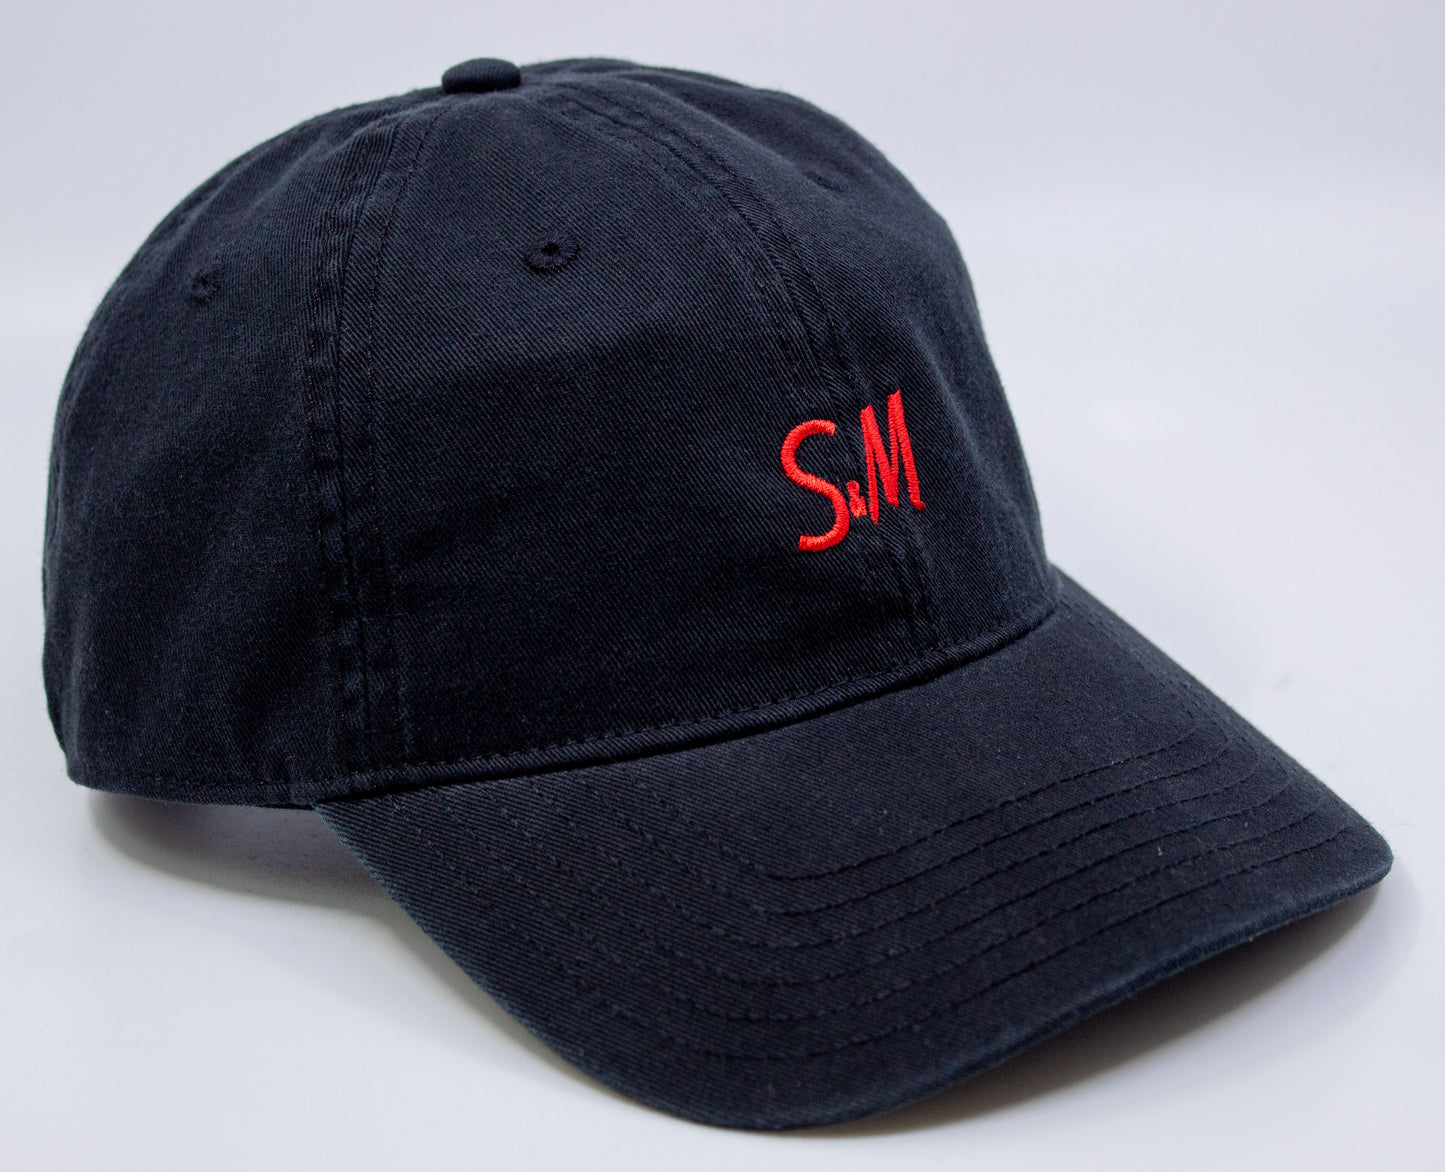 Standard Goods S & M Hat - Black/Red